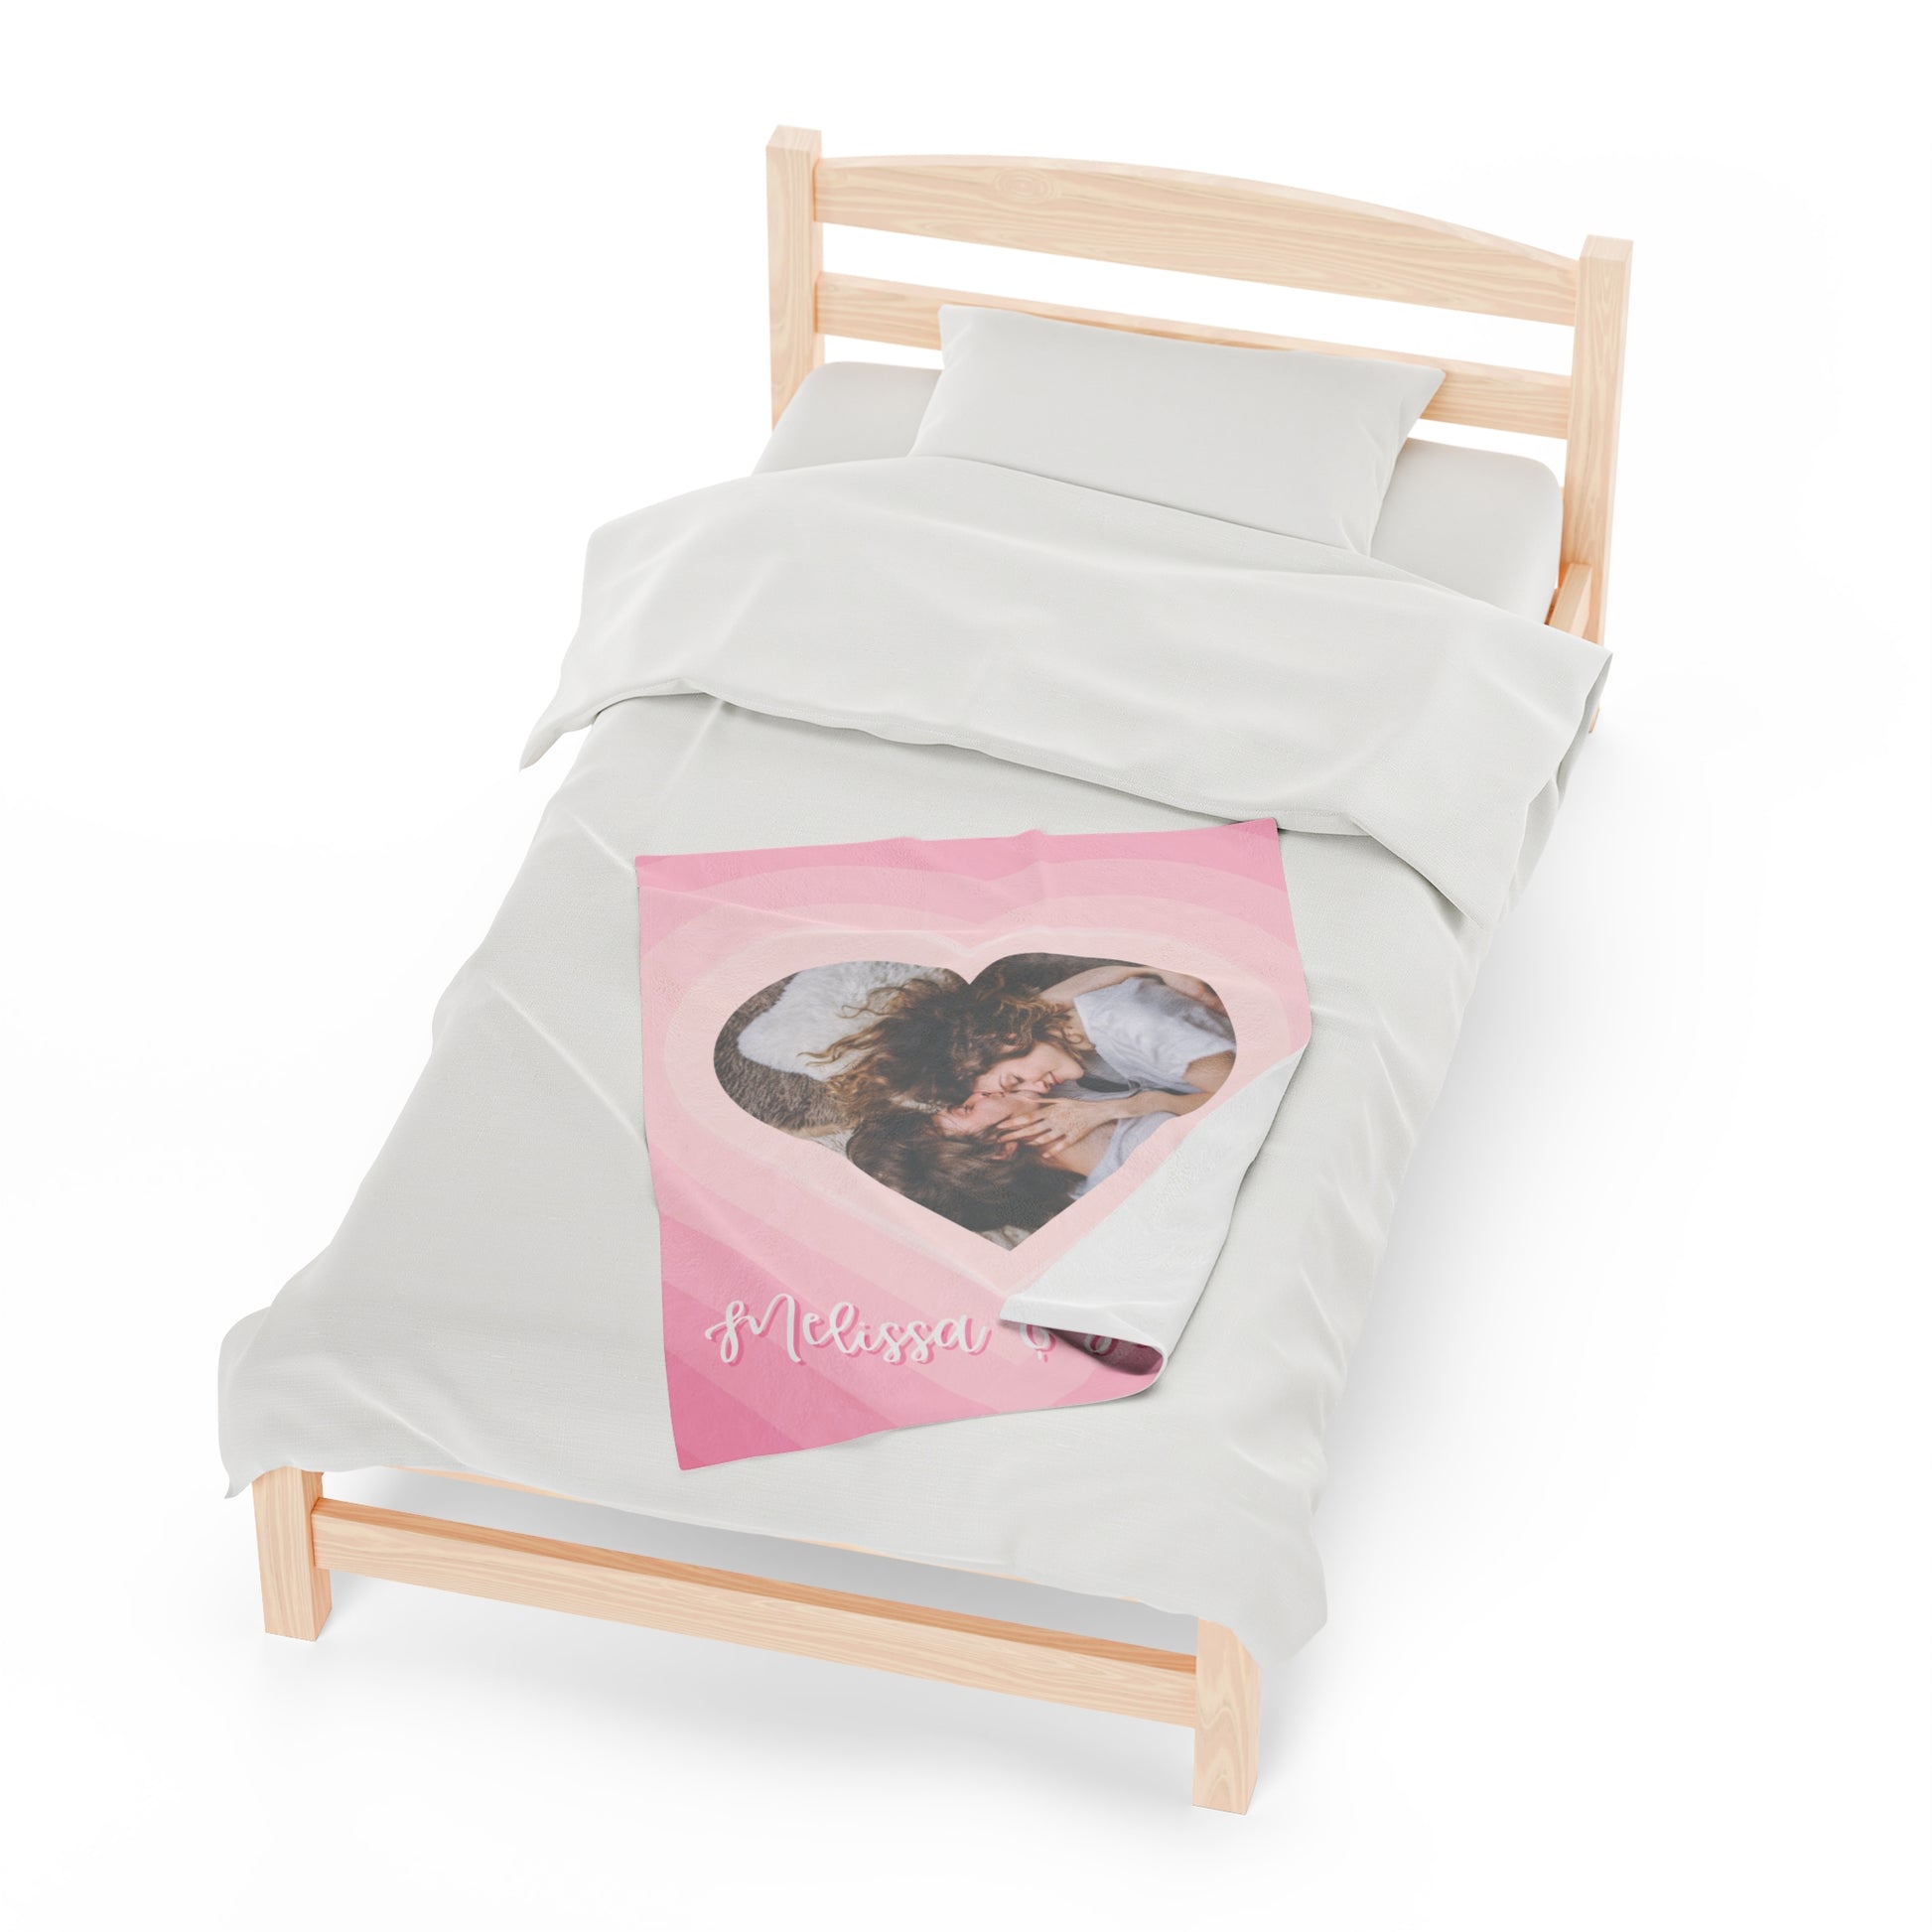 Personalized Heart Photo Blanket - Custom Couple's Photo Blanket